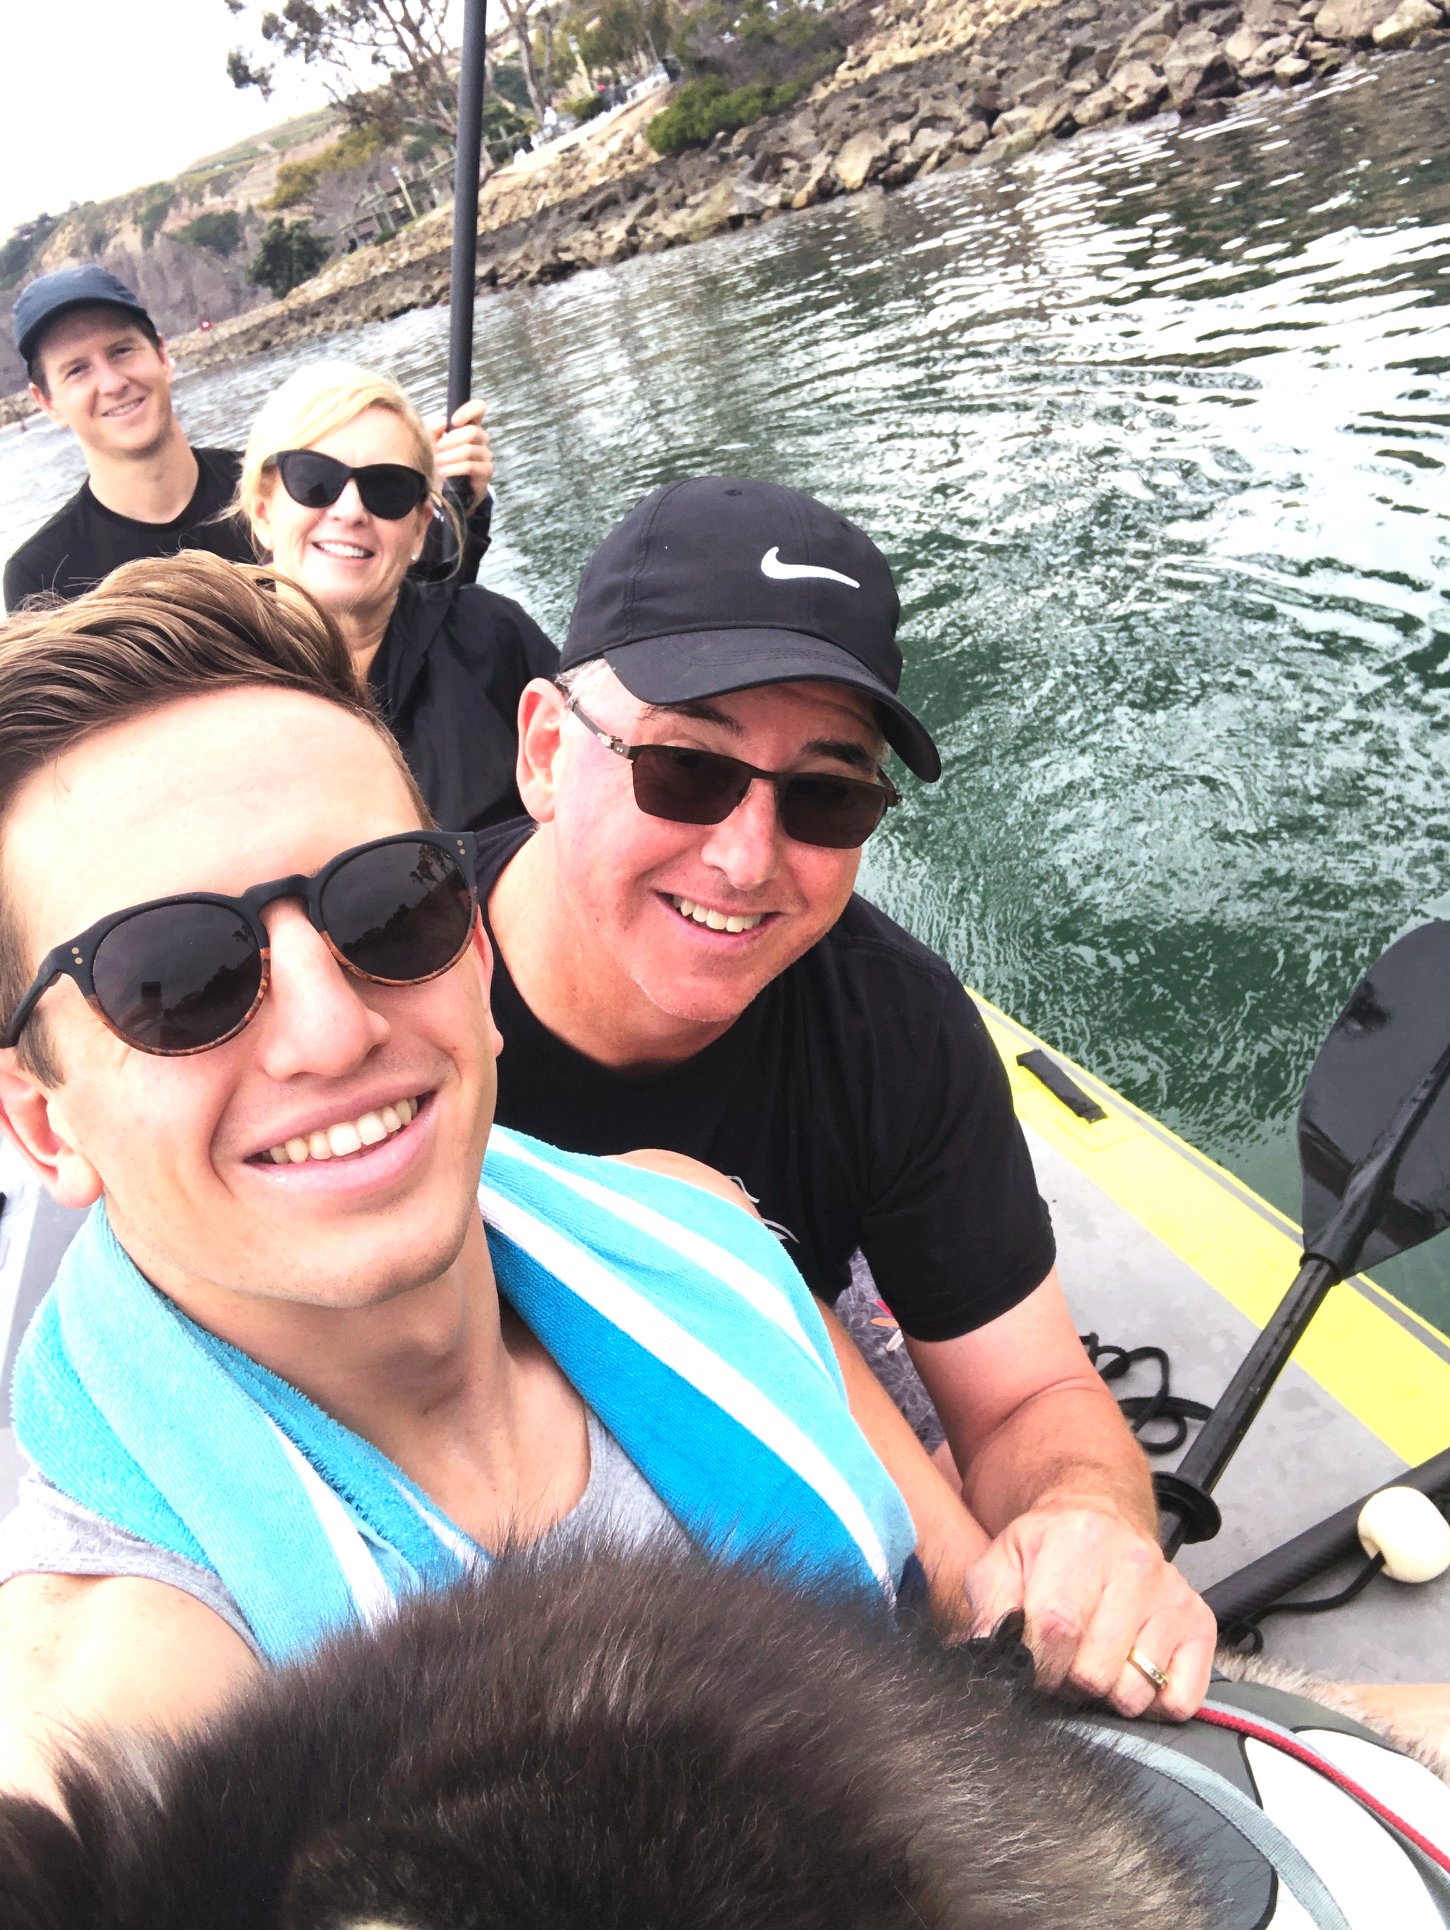 Family kayaking with Bixpy motor